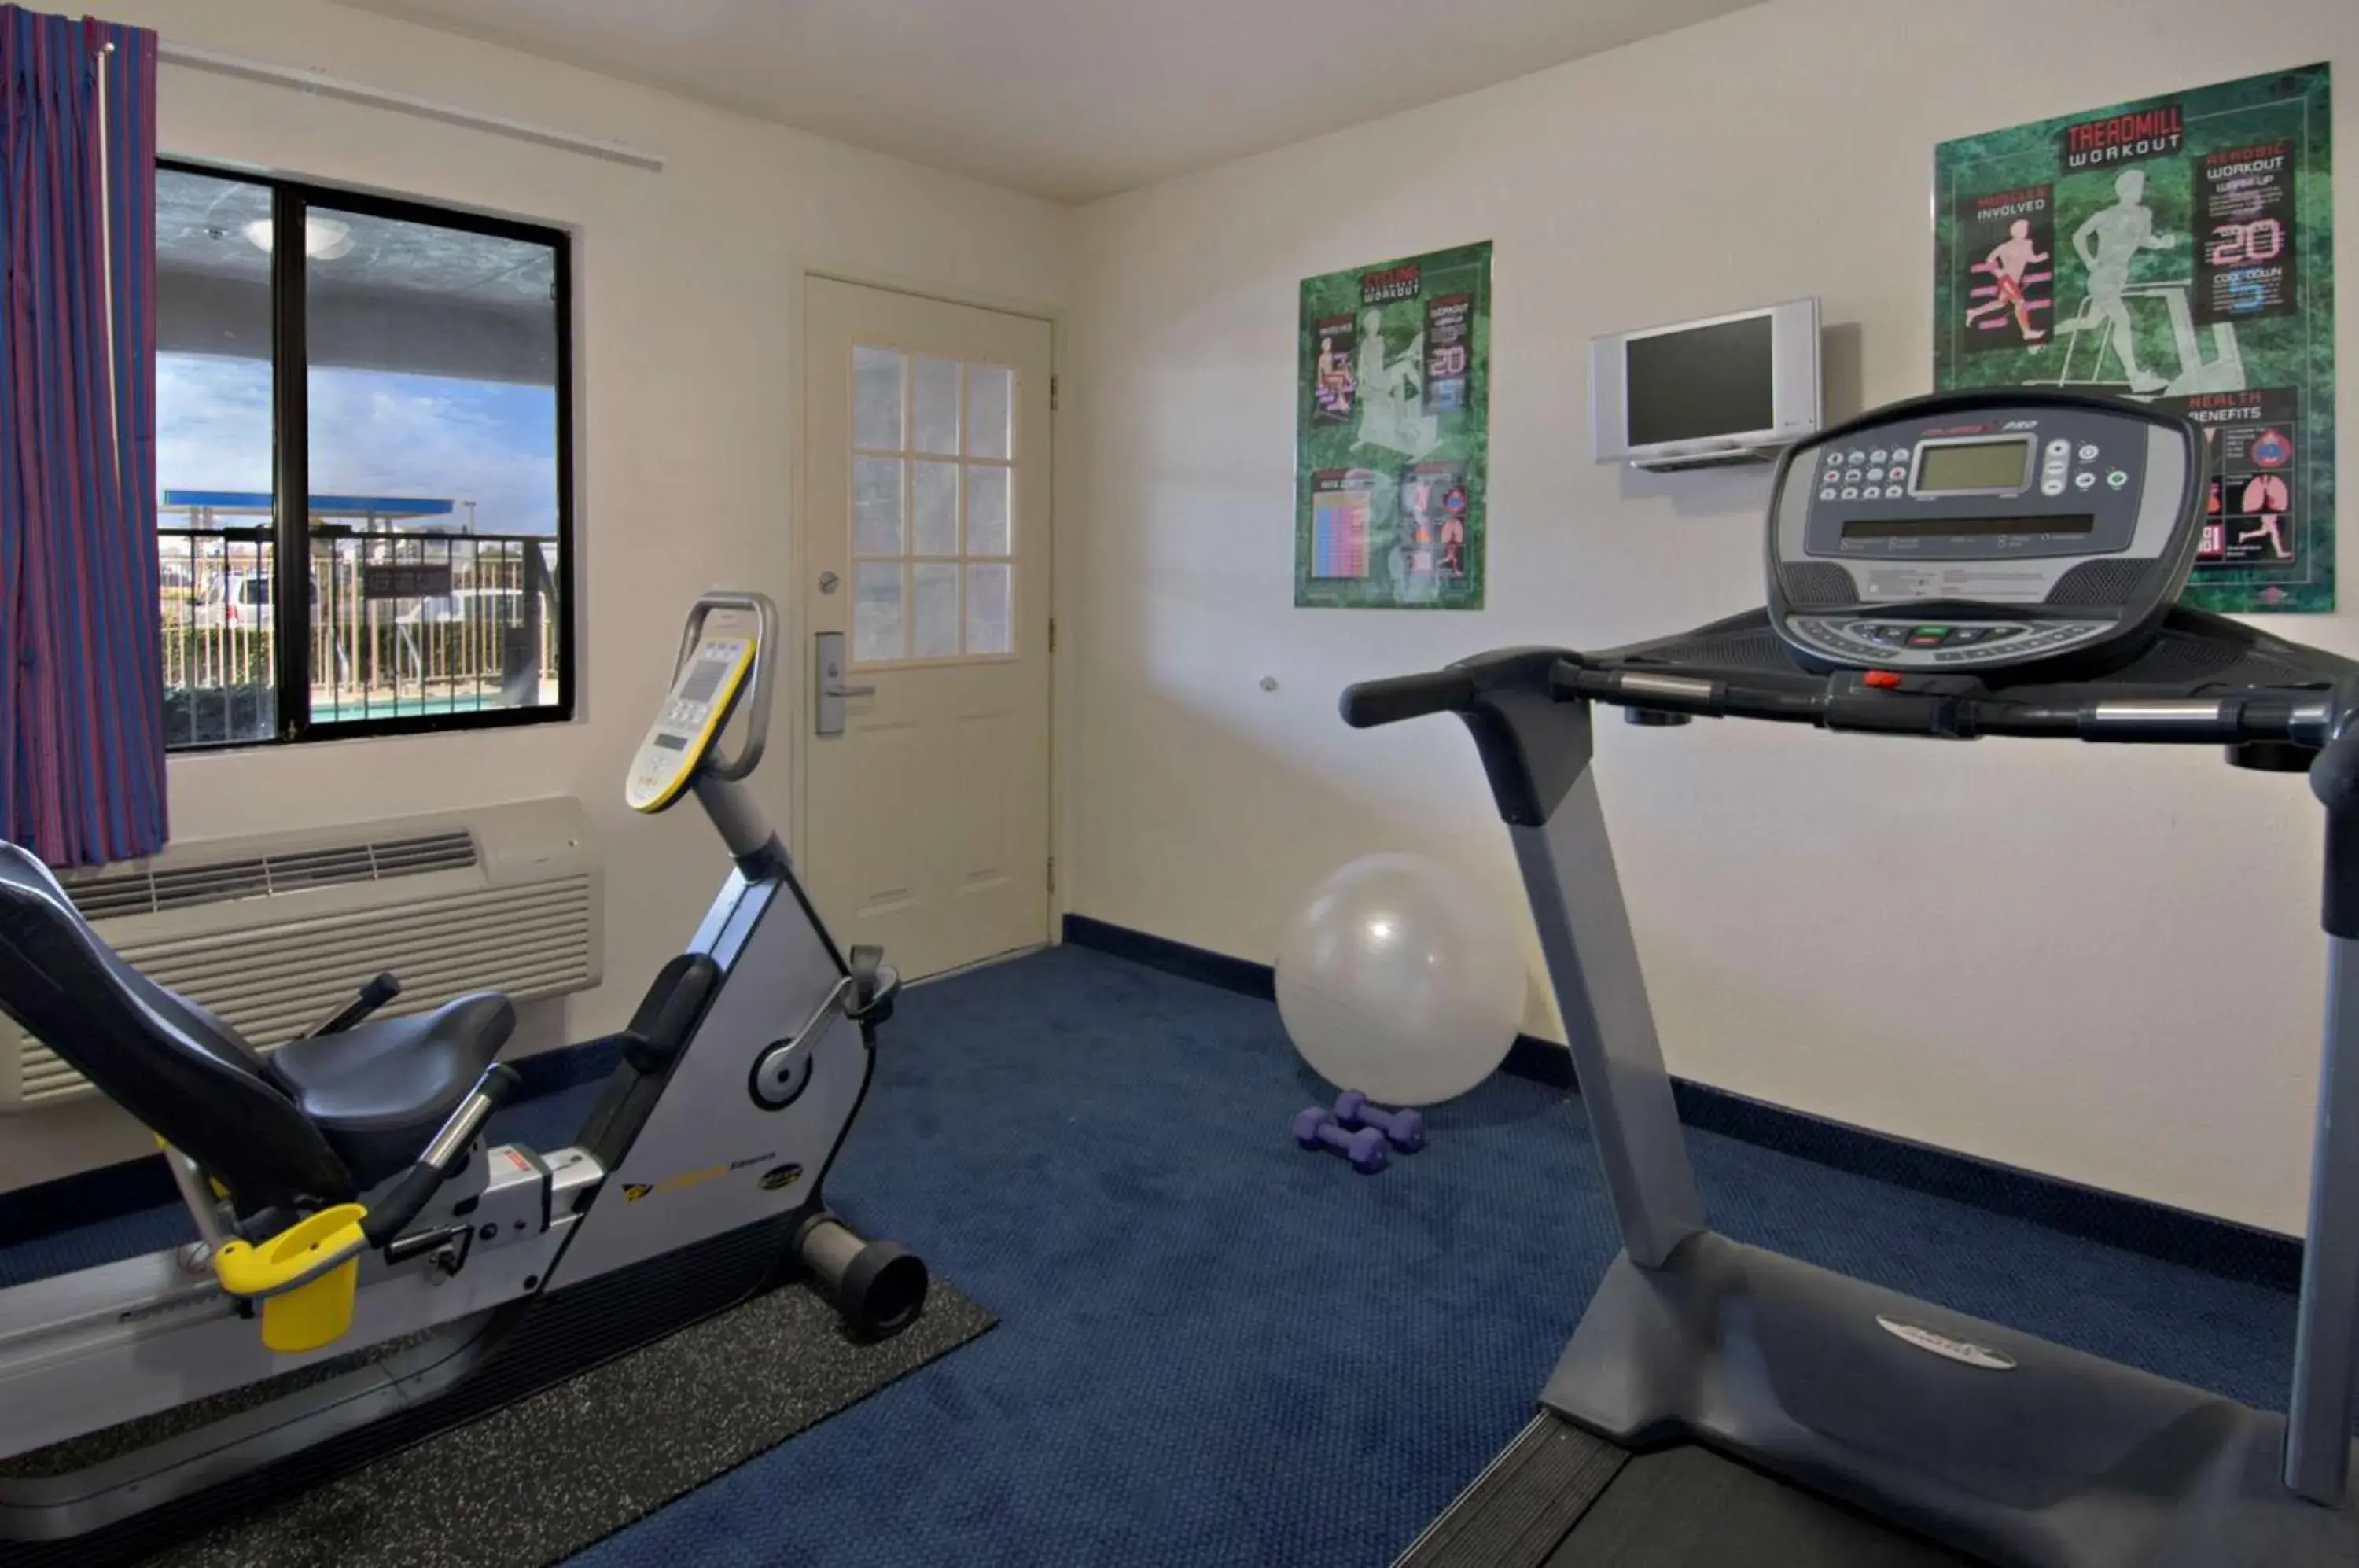 Fitness centre/facilities, Fitness Center/Facilities in California Inn and Suites, Rancho Cordova